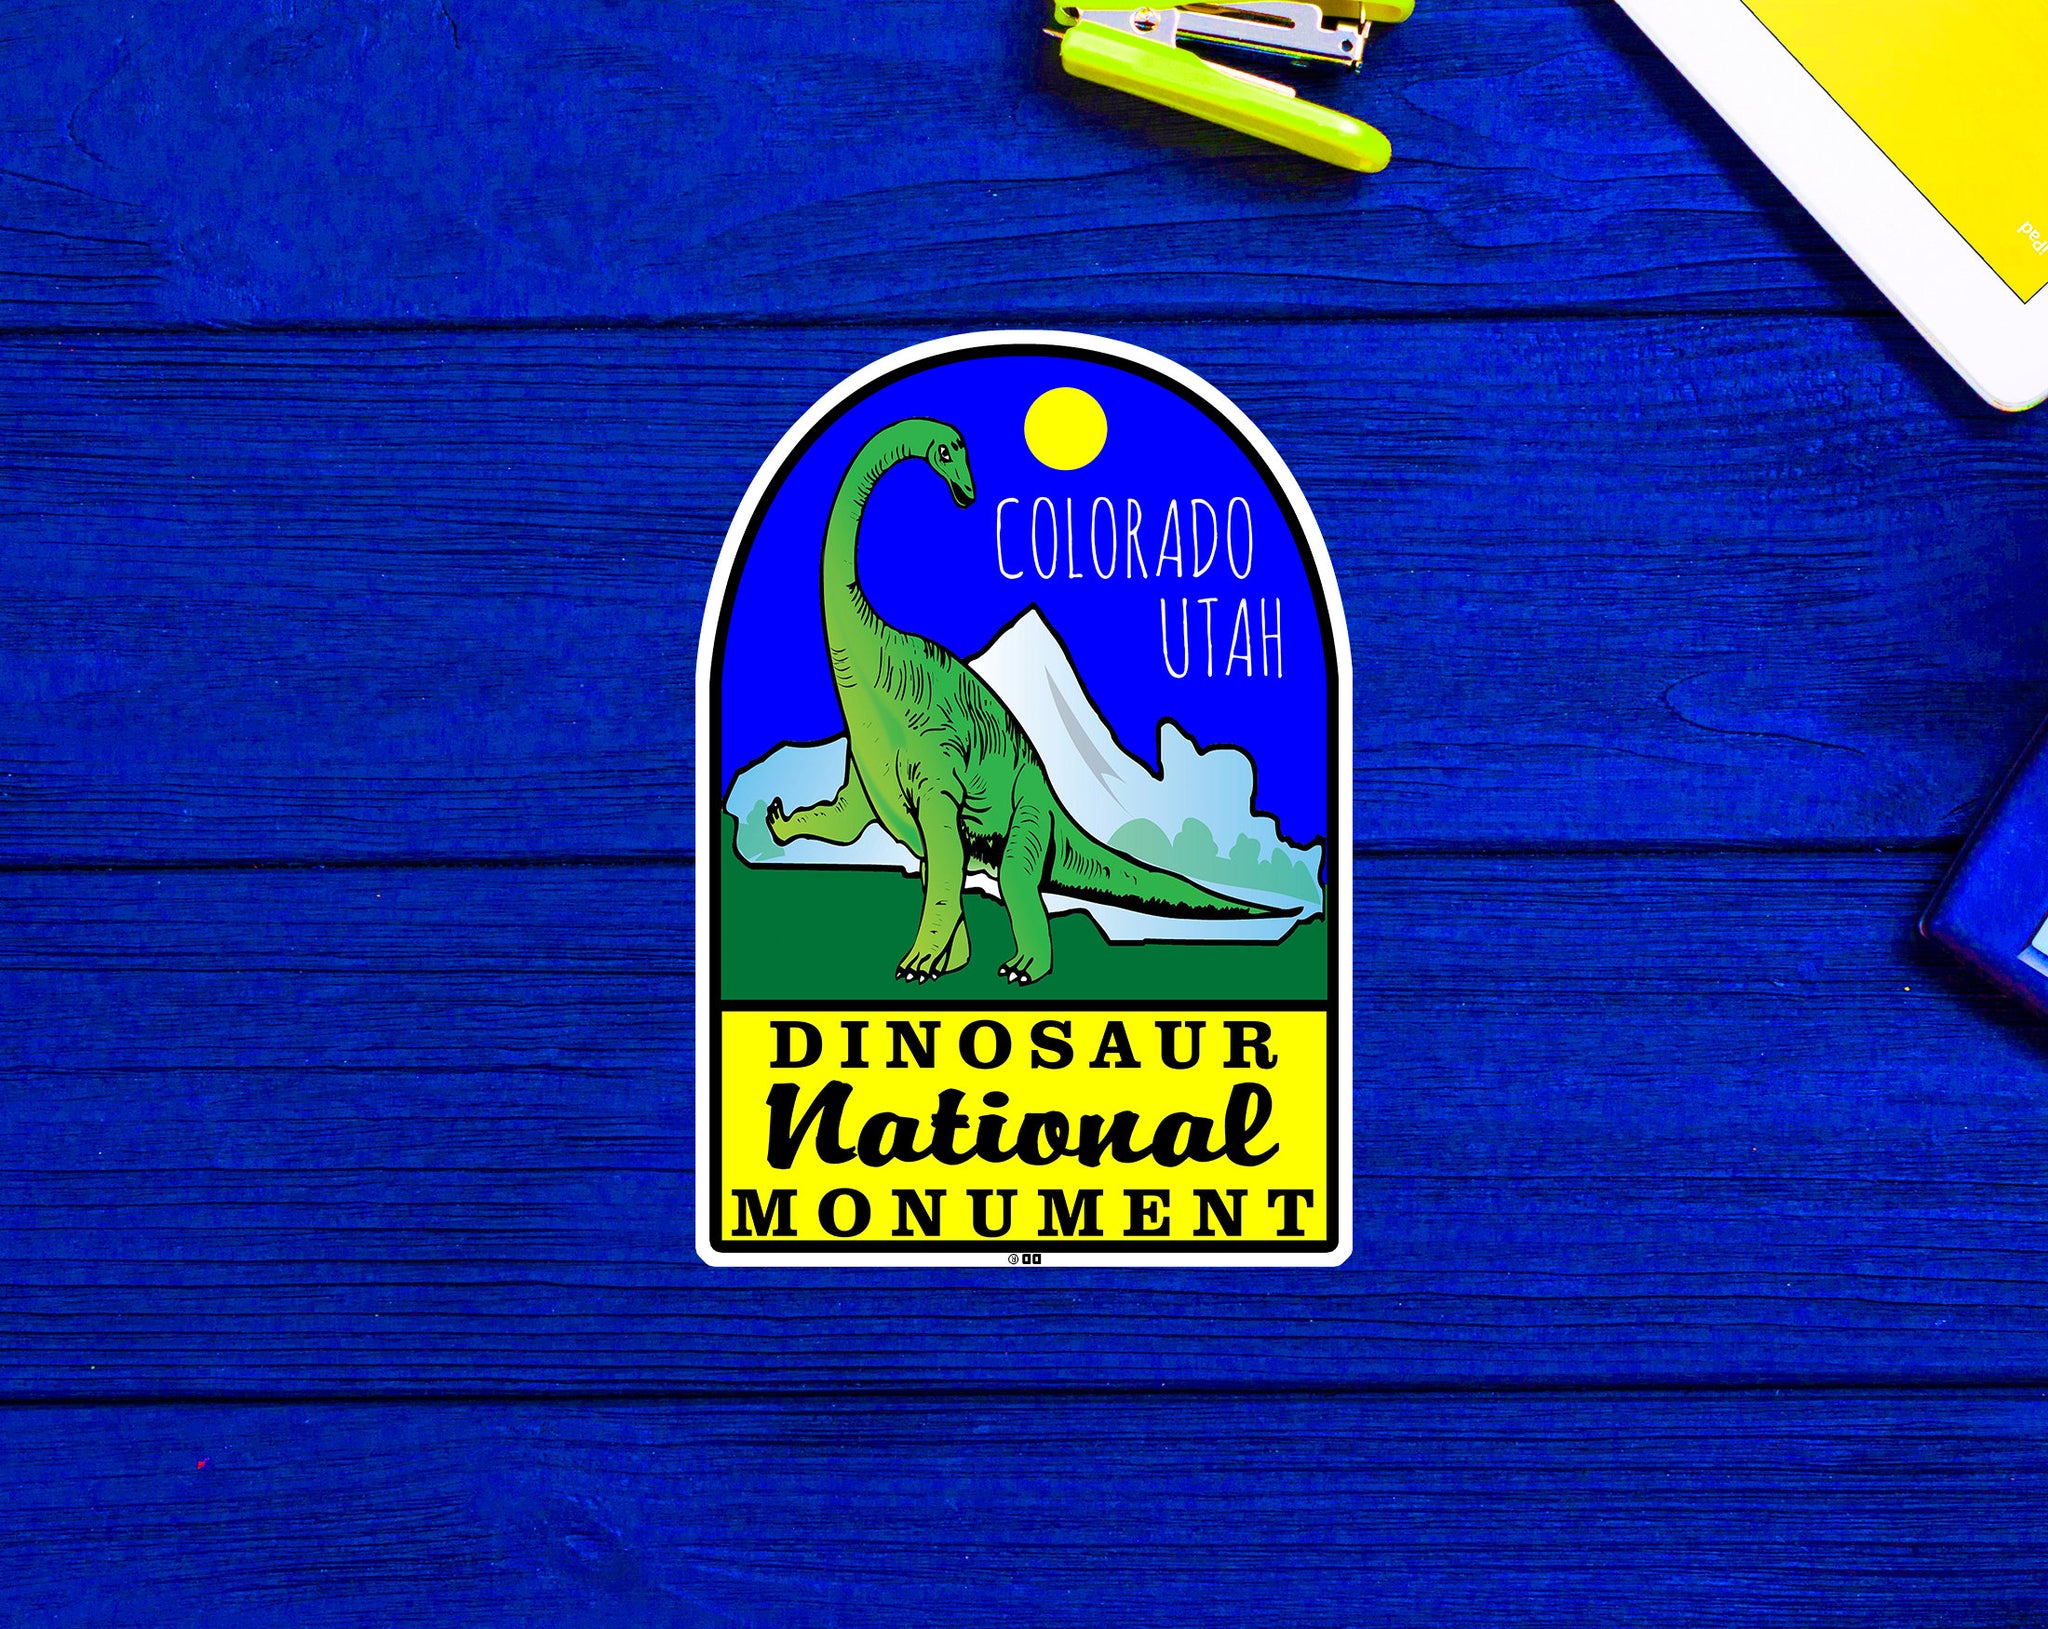 Dinosaur National Monument Utah Sticker Vintage Decal 3.9"